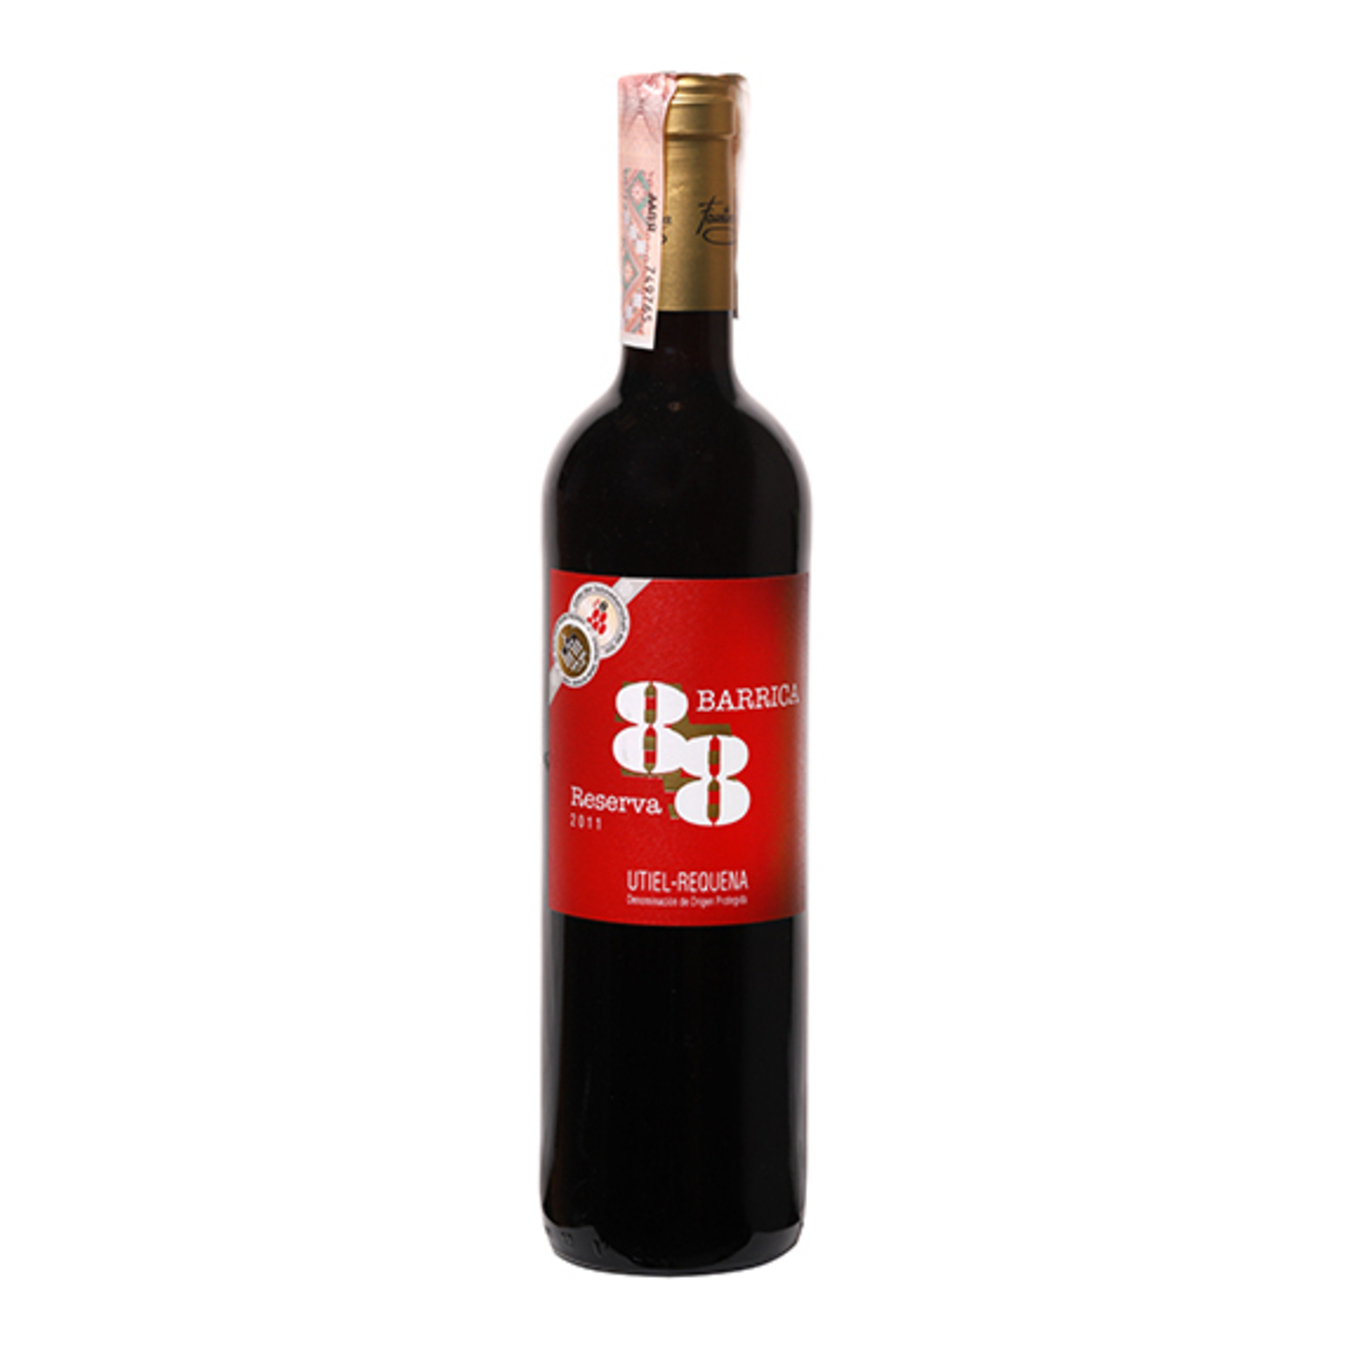 Barrica 88 Reserva Utiel-Requena red dry wine 13% 0.75l